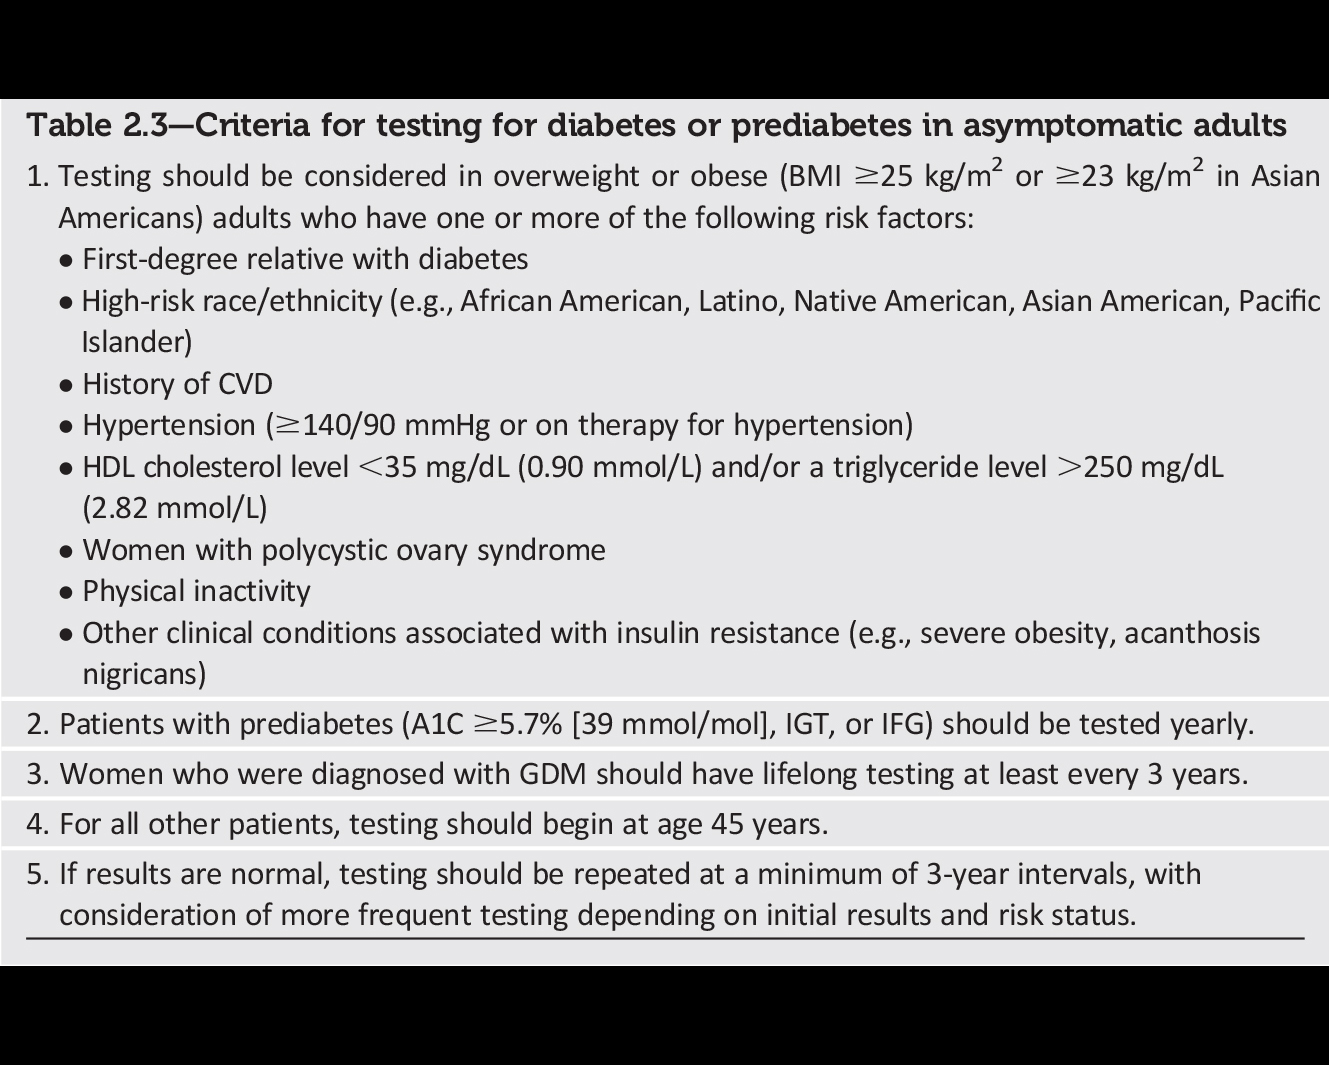 Table 2.3-Criteria for testing diabetes or prediabetes in asymptomatic adults